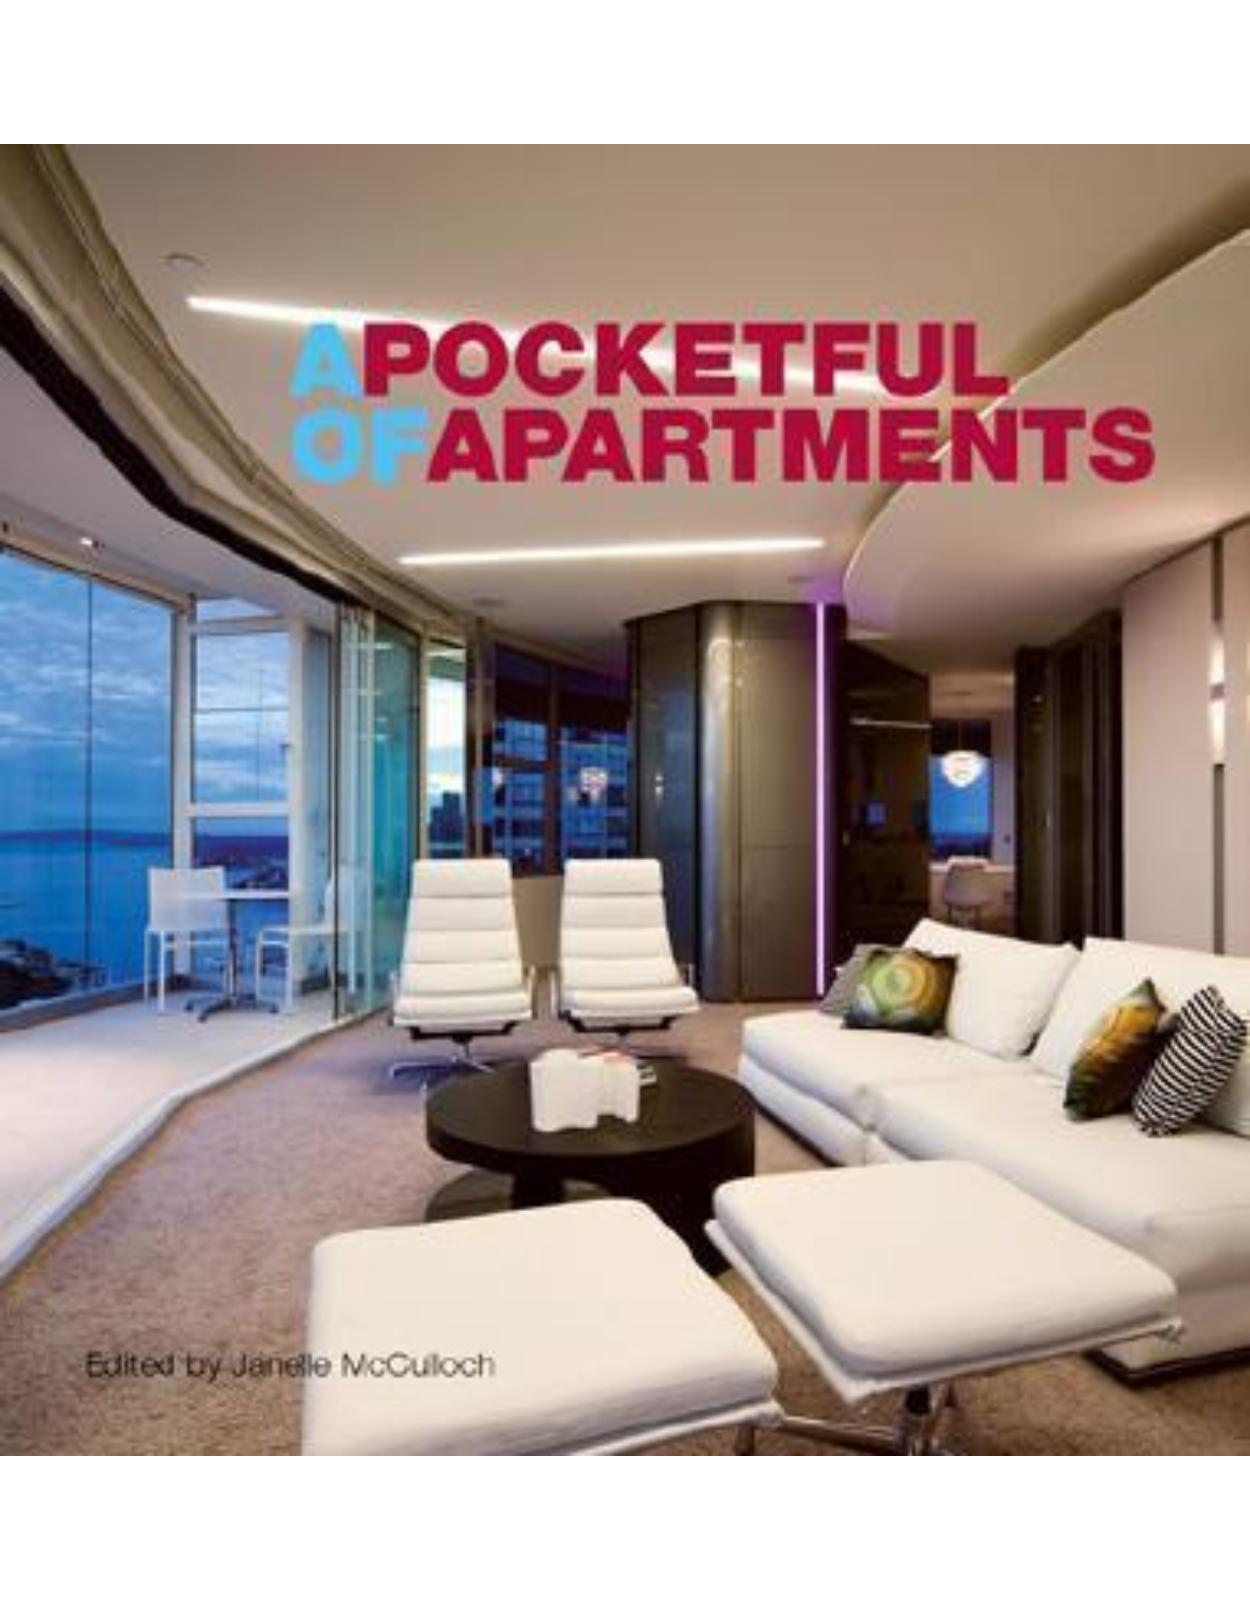 A Pocketful of Apartments